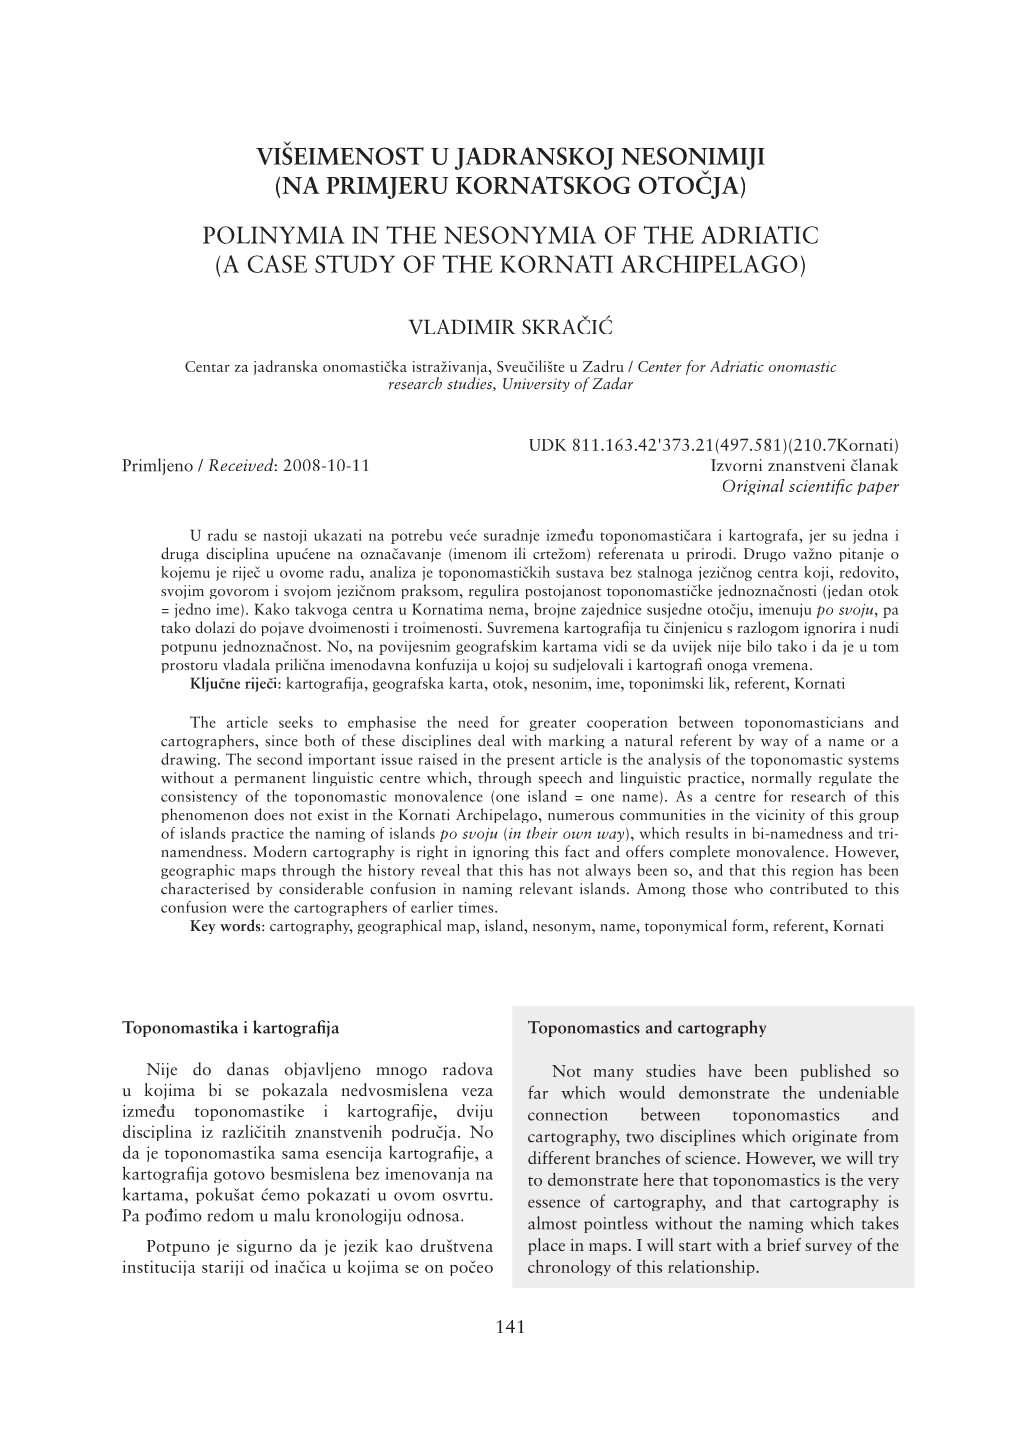 Polinymia in the Nesonymia of the Adriatic (A Case Study of the Kornati Archipelago)